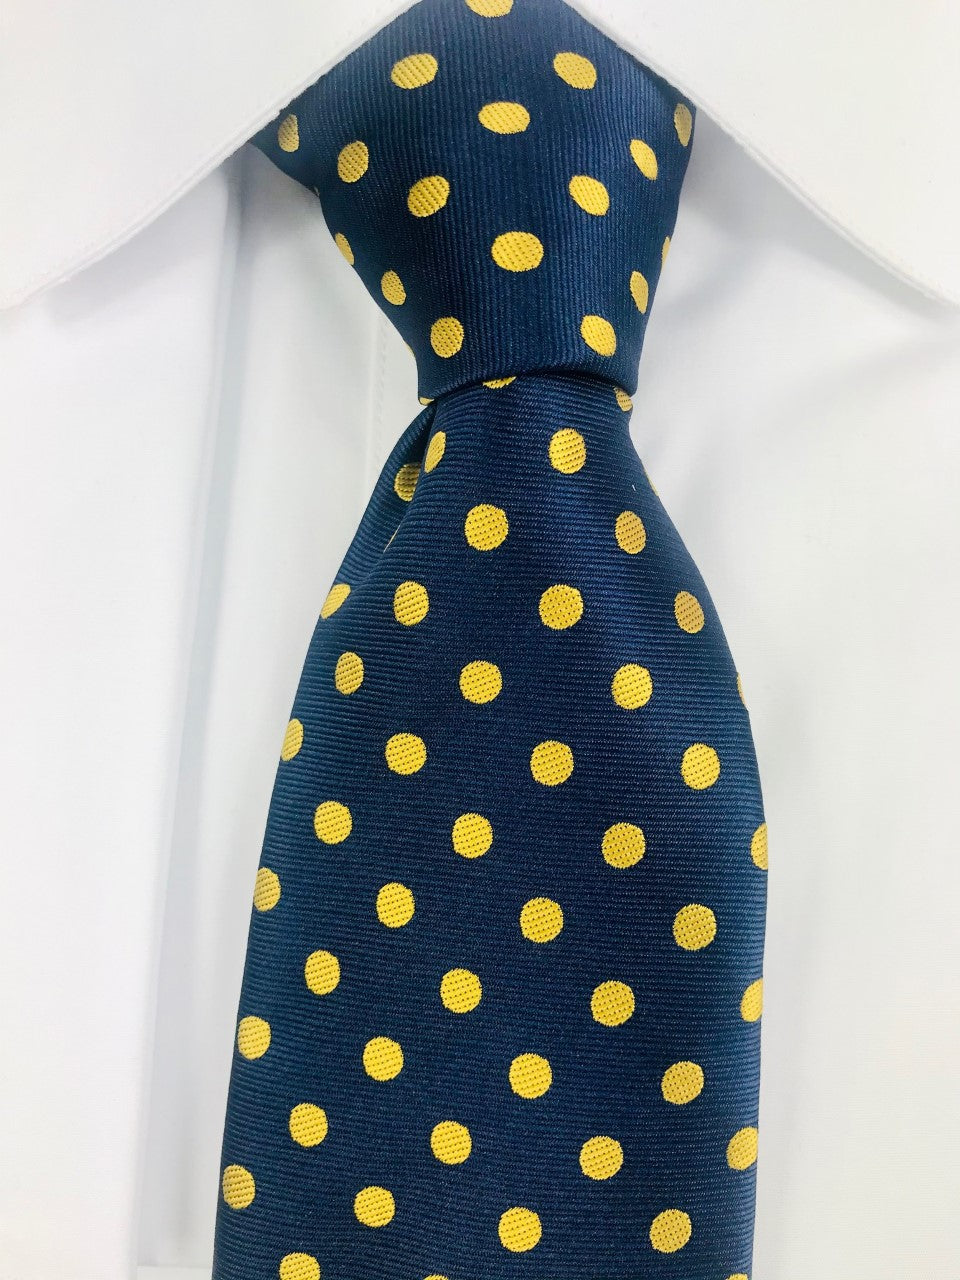 Blue necktie with gold polka dots set